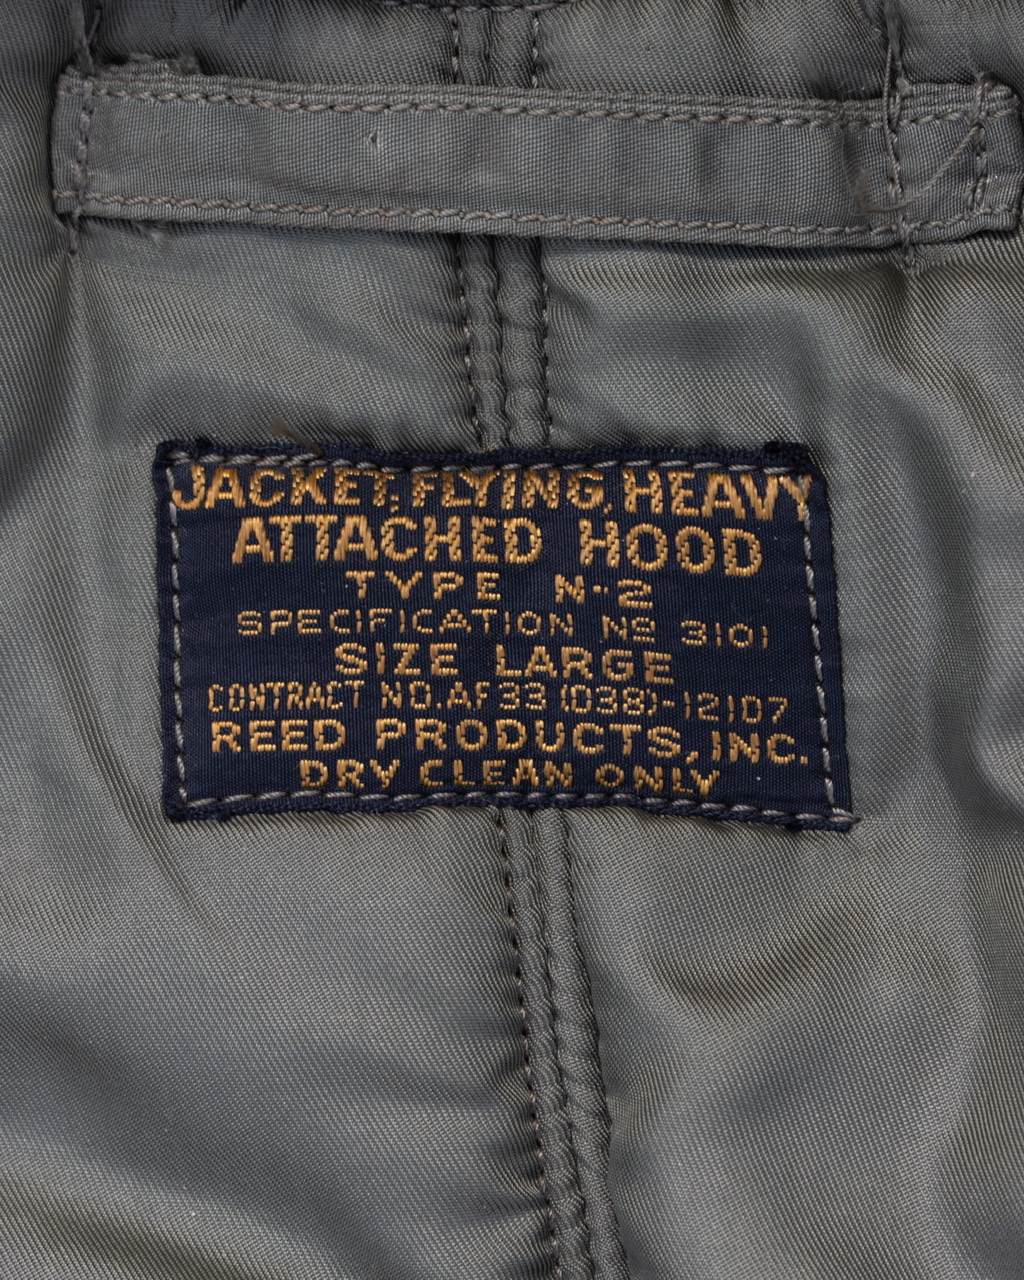 ORIGINAL REED PRODUCTS, INC. TYPE N-2 FLYING JACKET | Vintage Leather ...